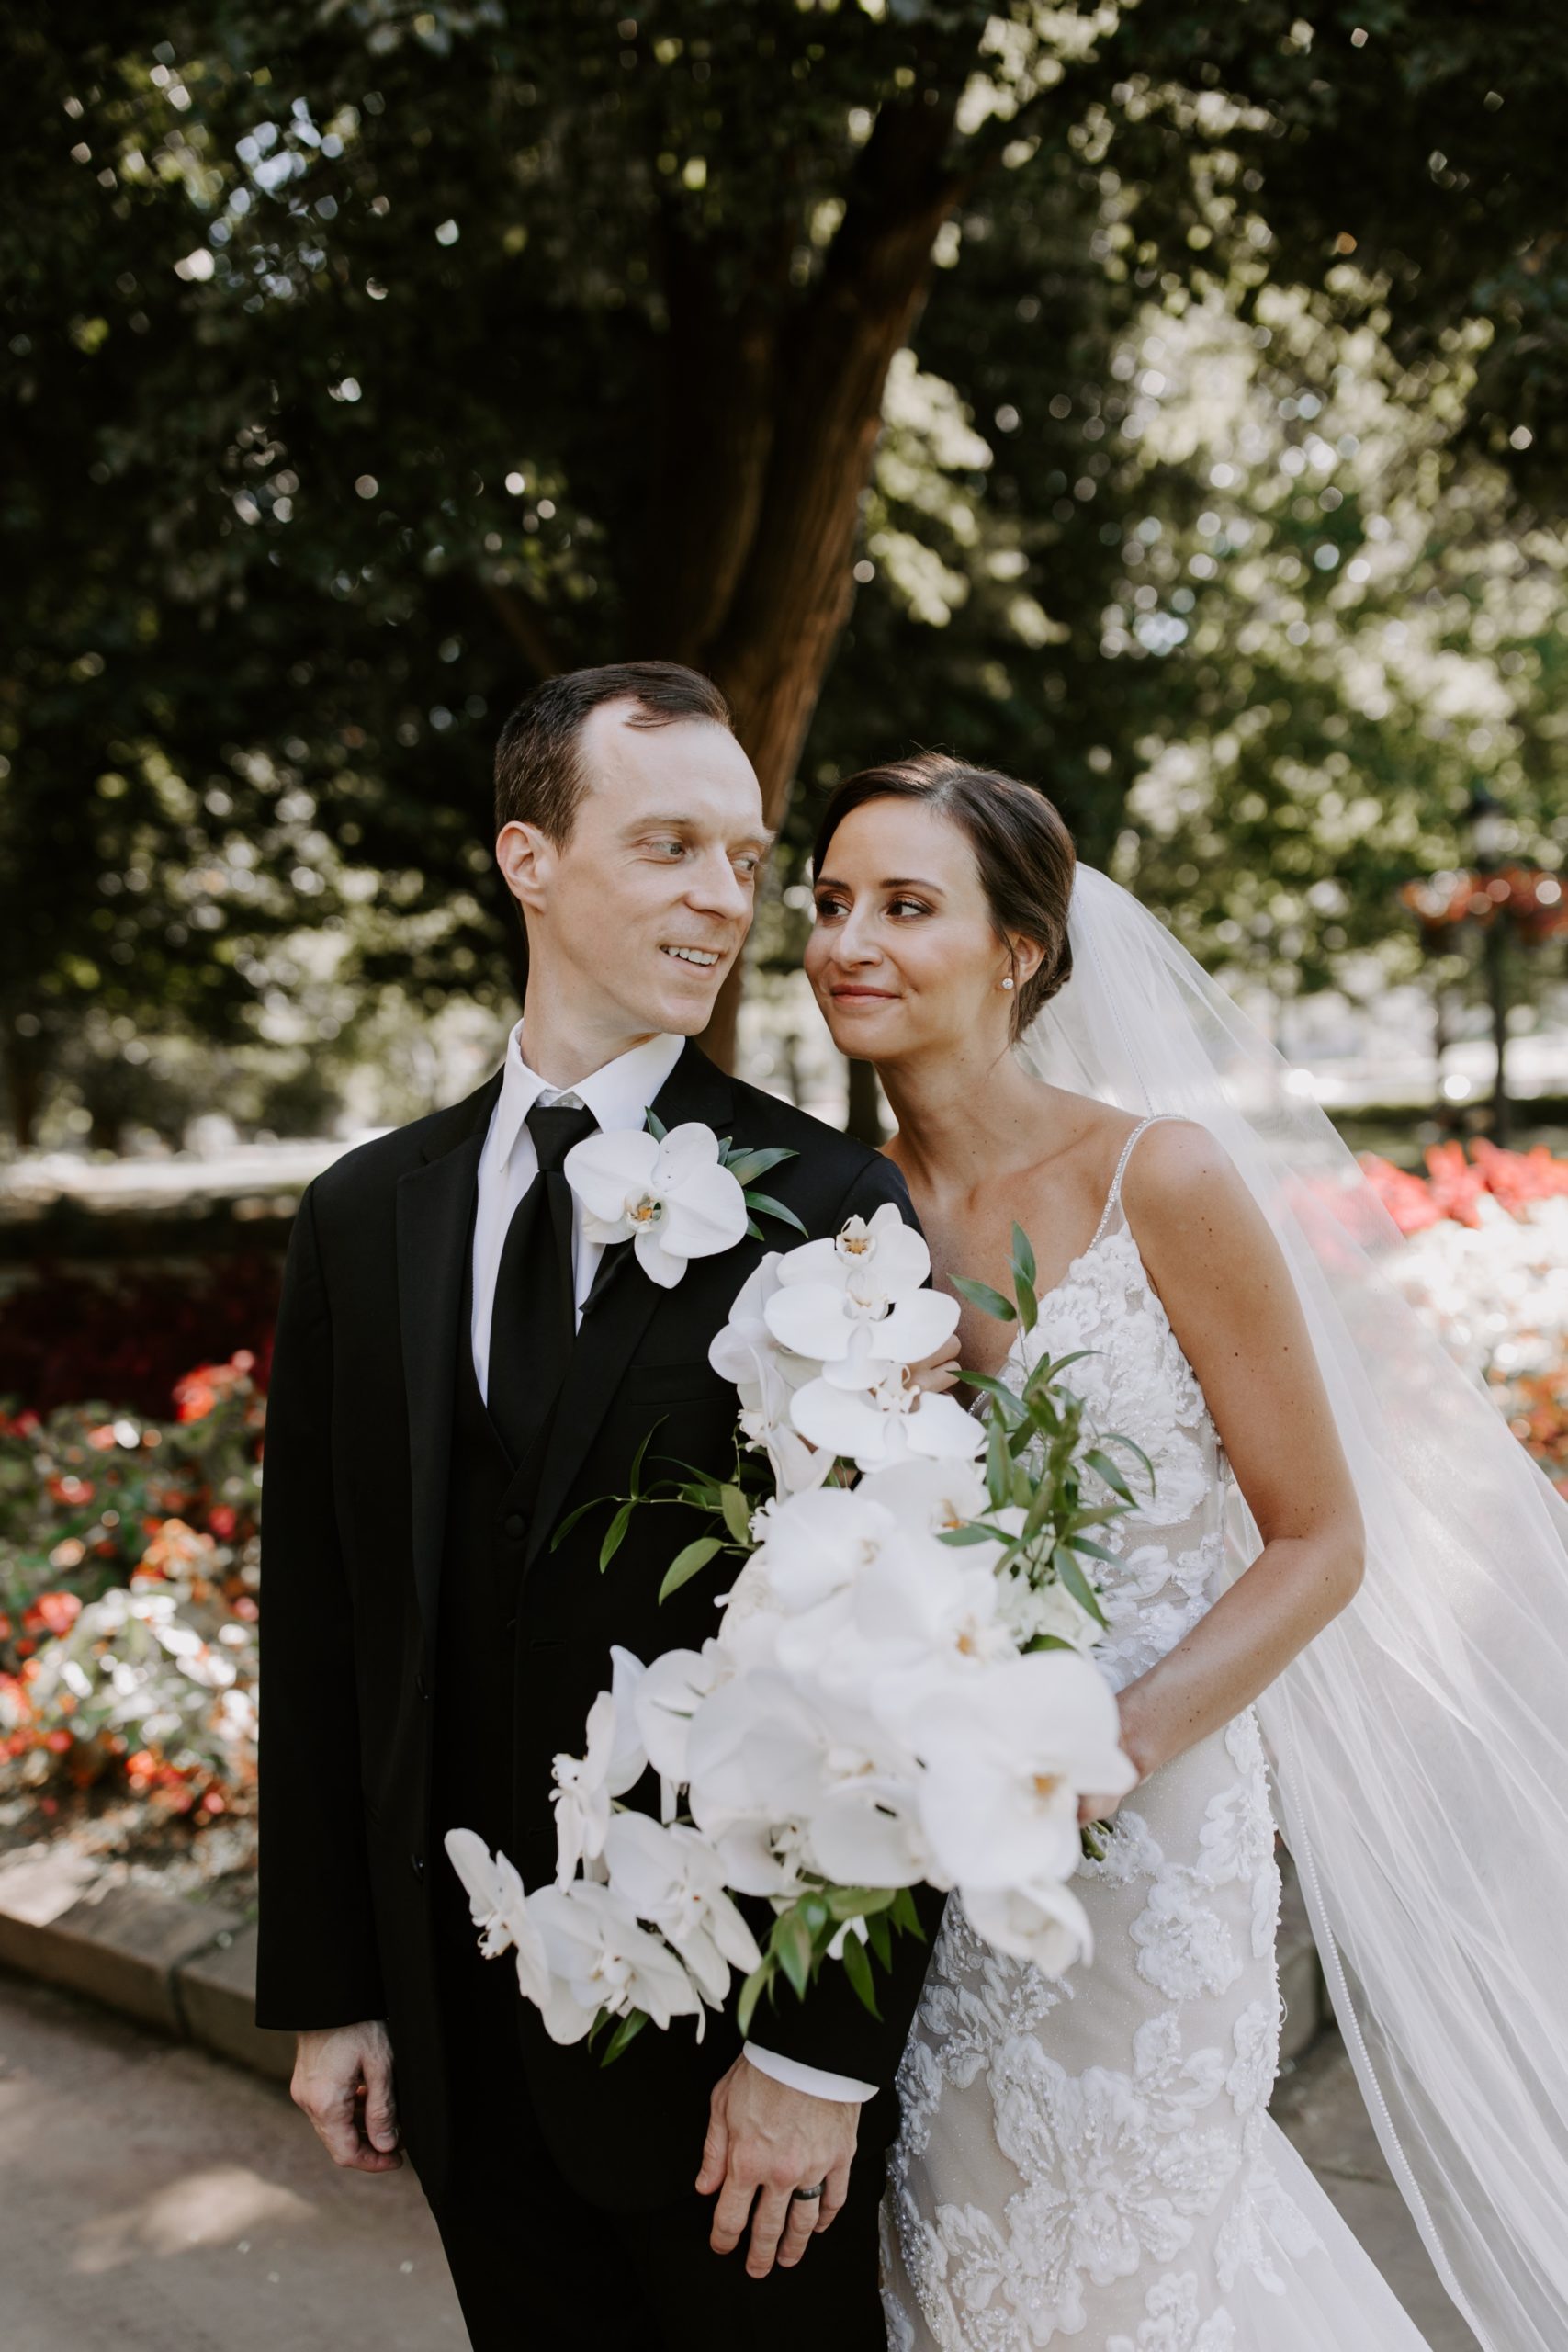 wedding photographer and videographer; Mariah Treiber Photography & Alec James Productions